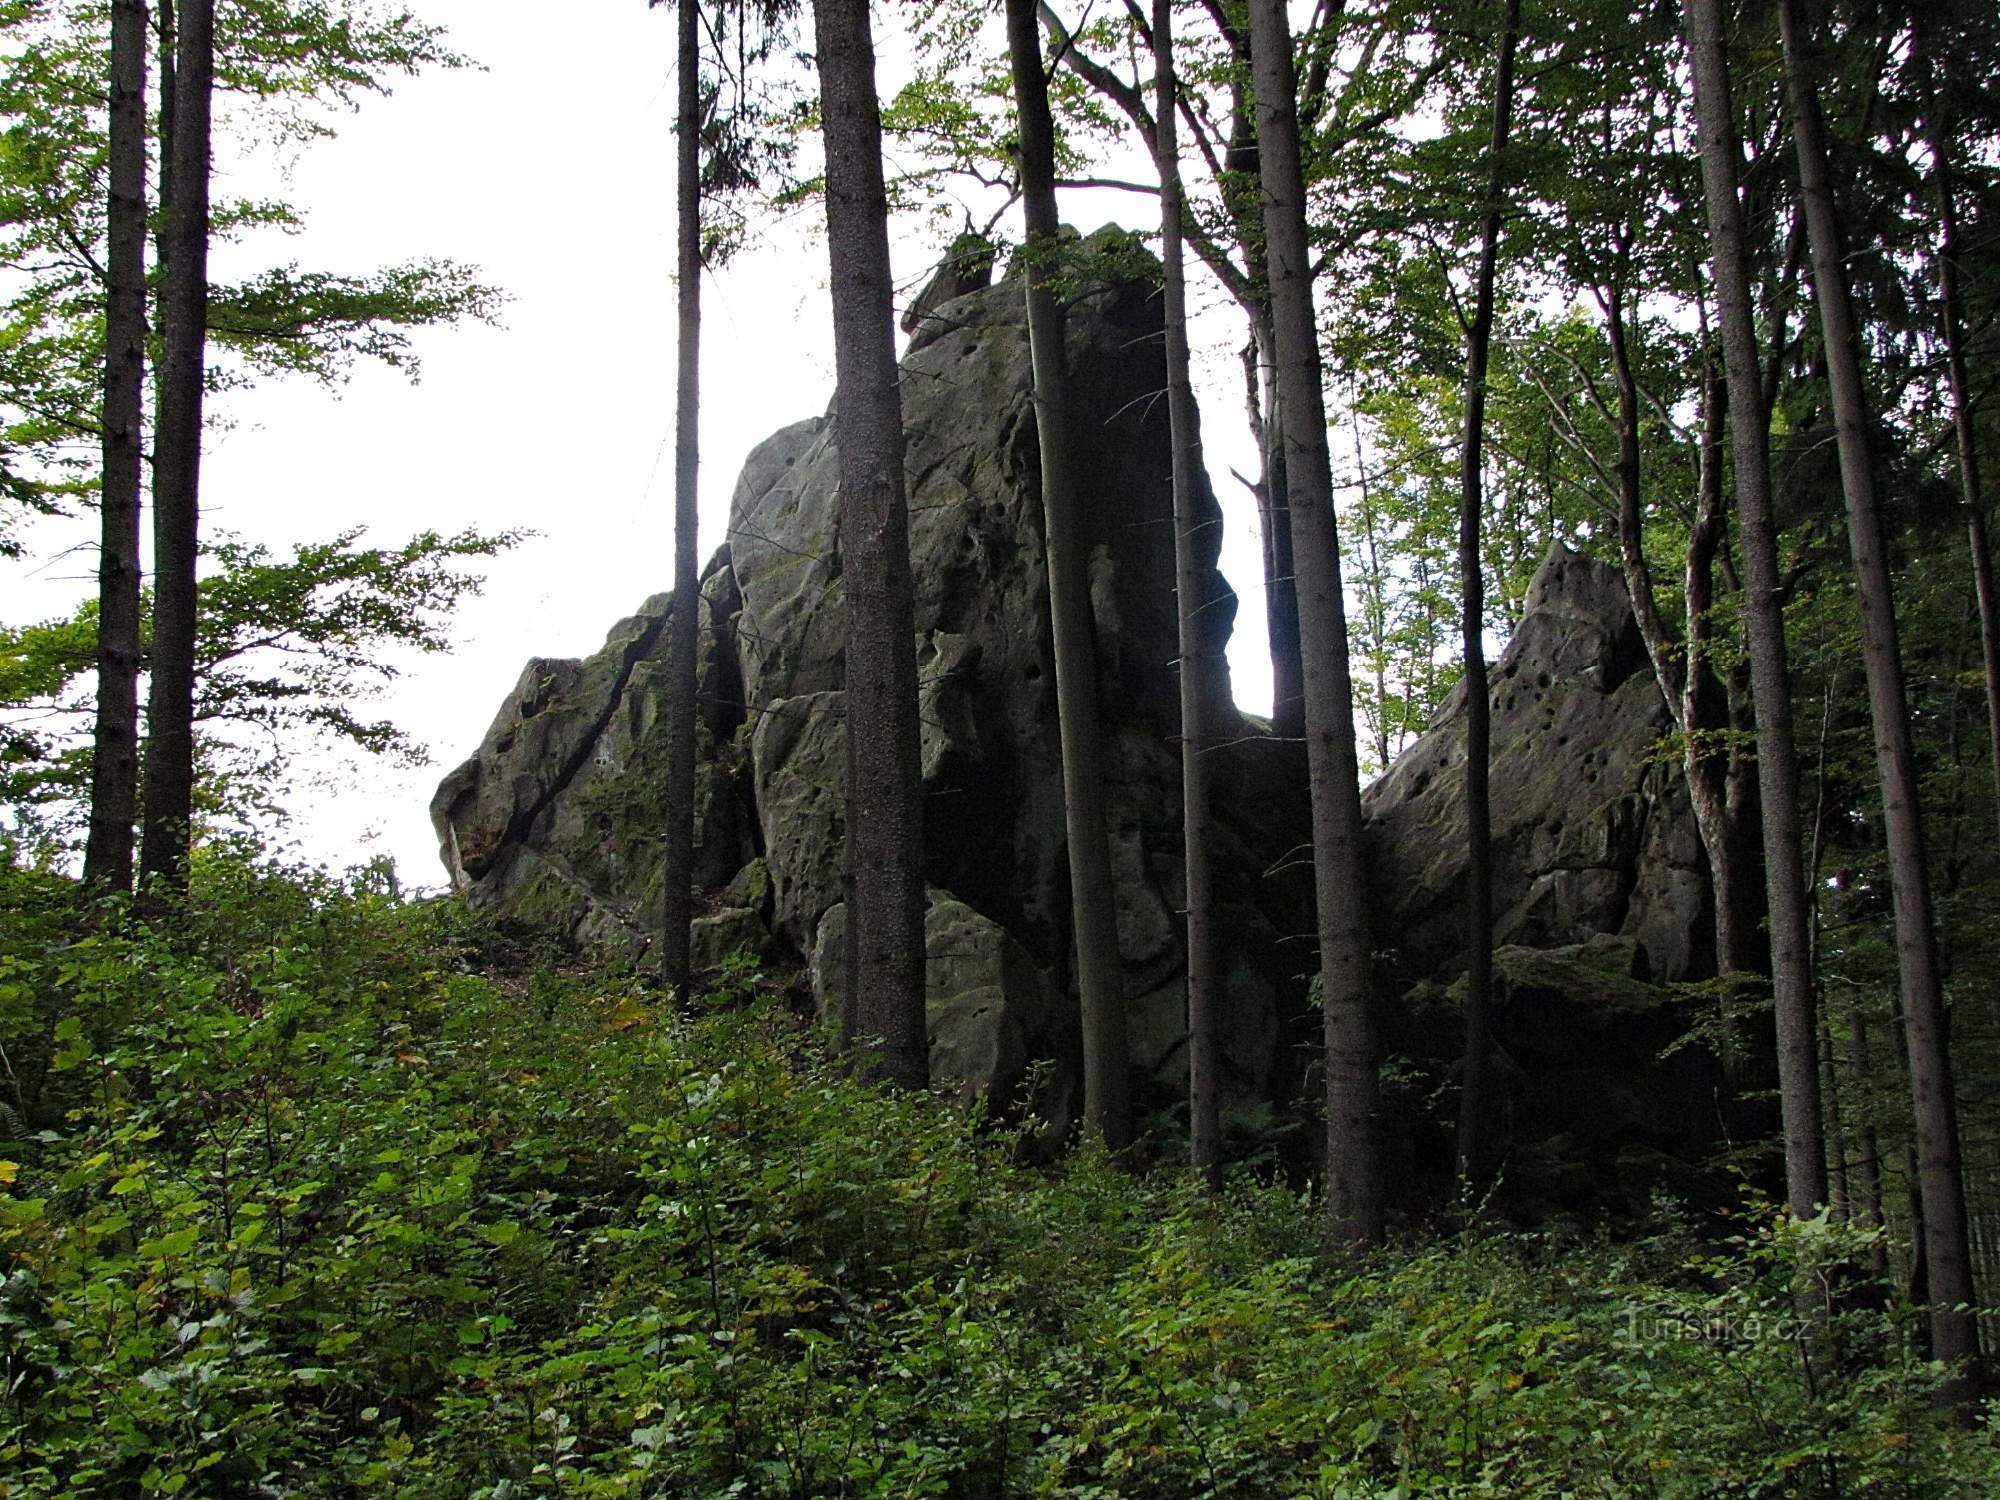 Hostýn Hillsの最も奇妙な岩 - パート3